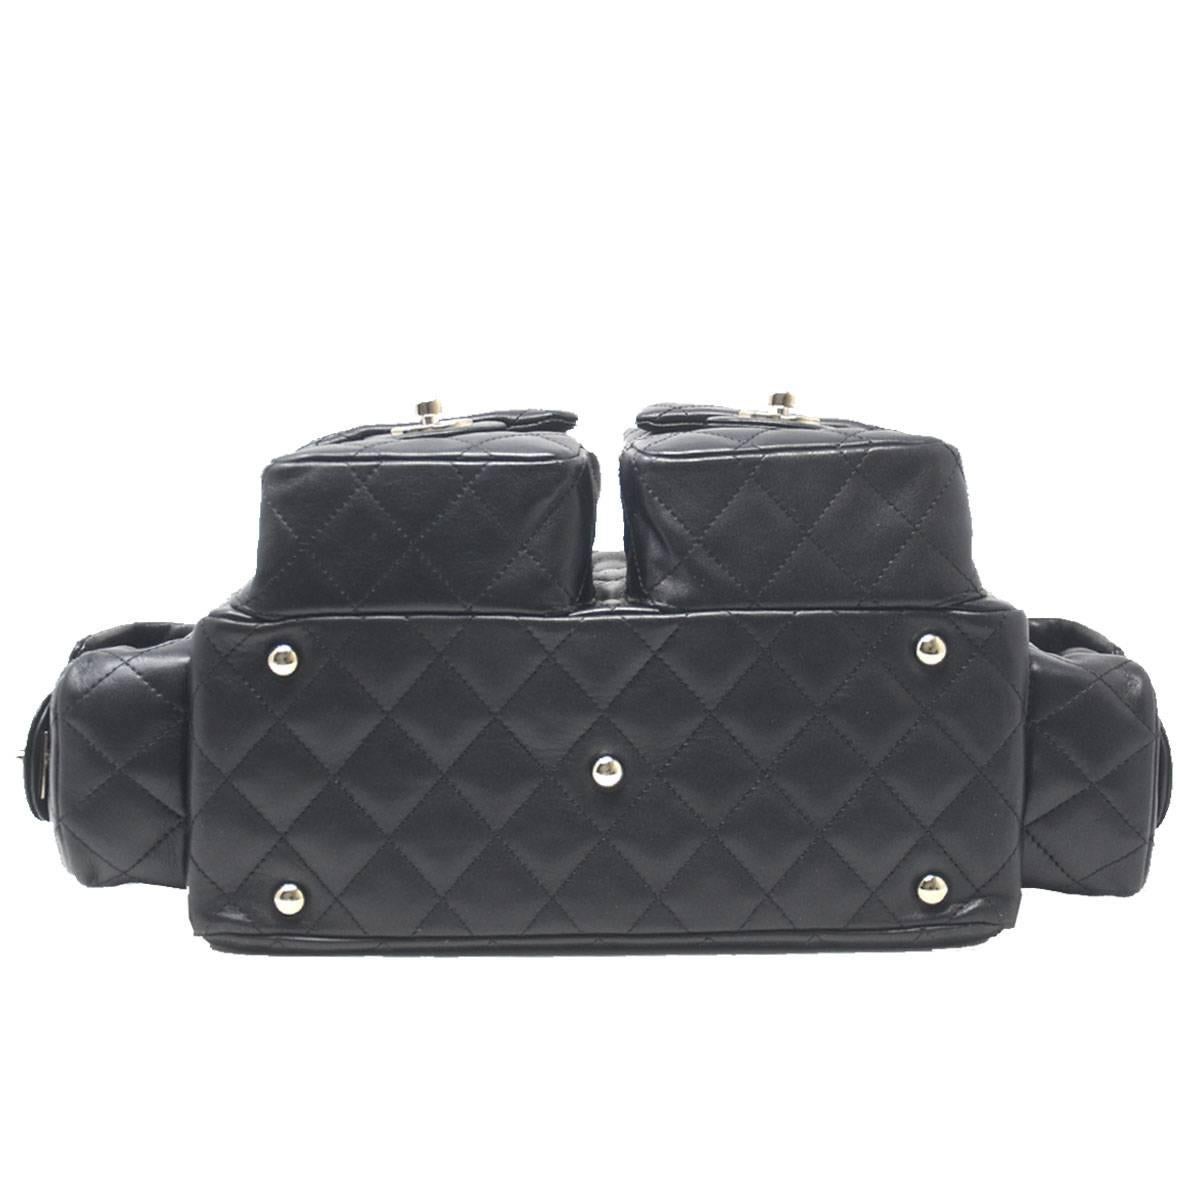 Women's Chanel Cambon Reporter Black Leather Shoulder bag